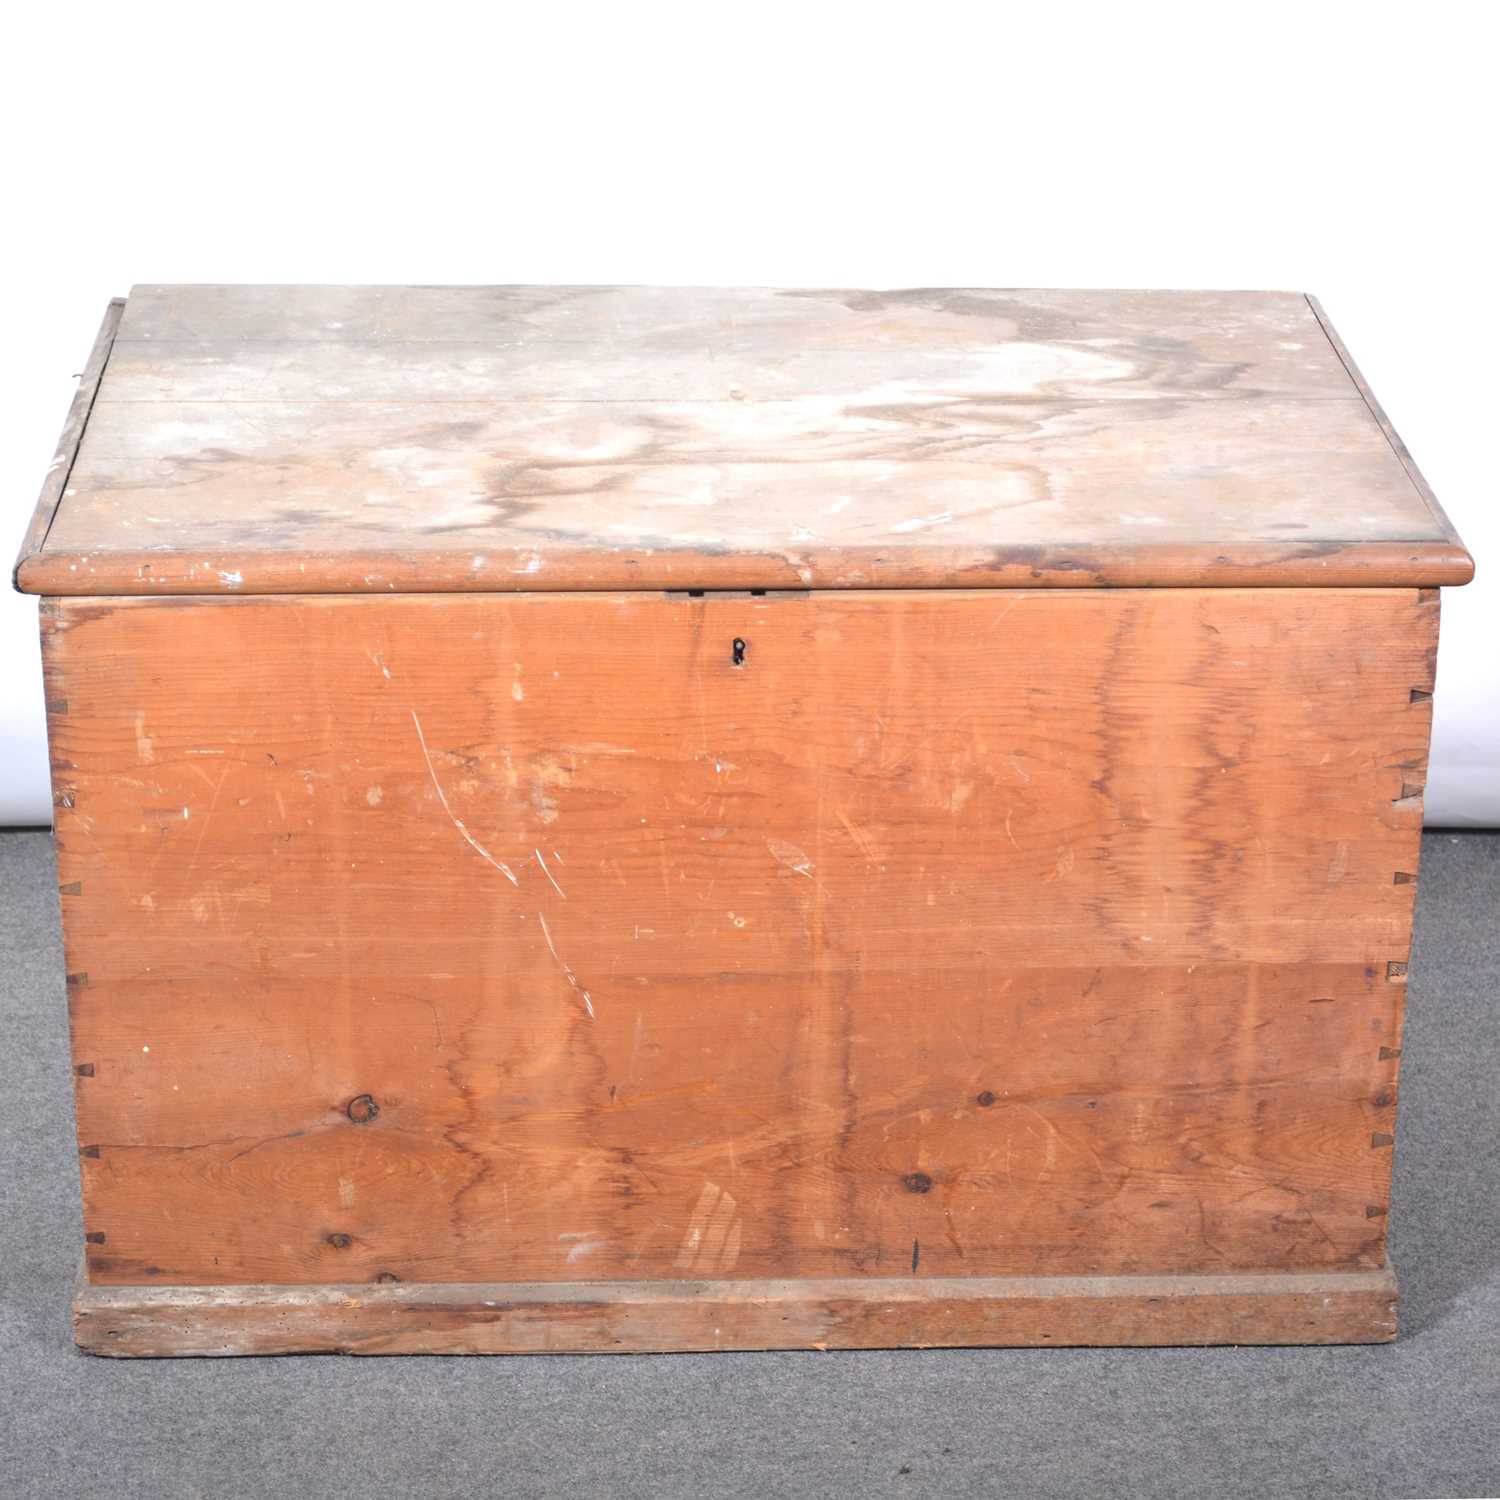 Lot 47 - Large pine box